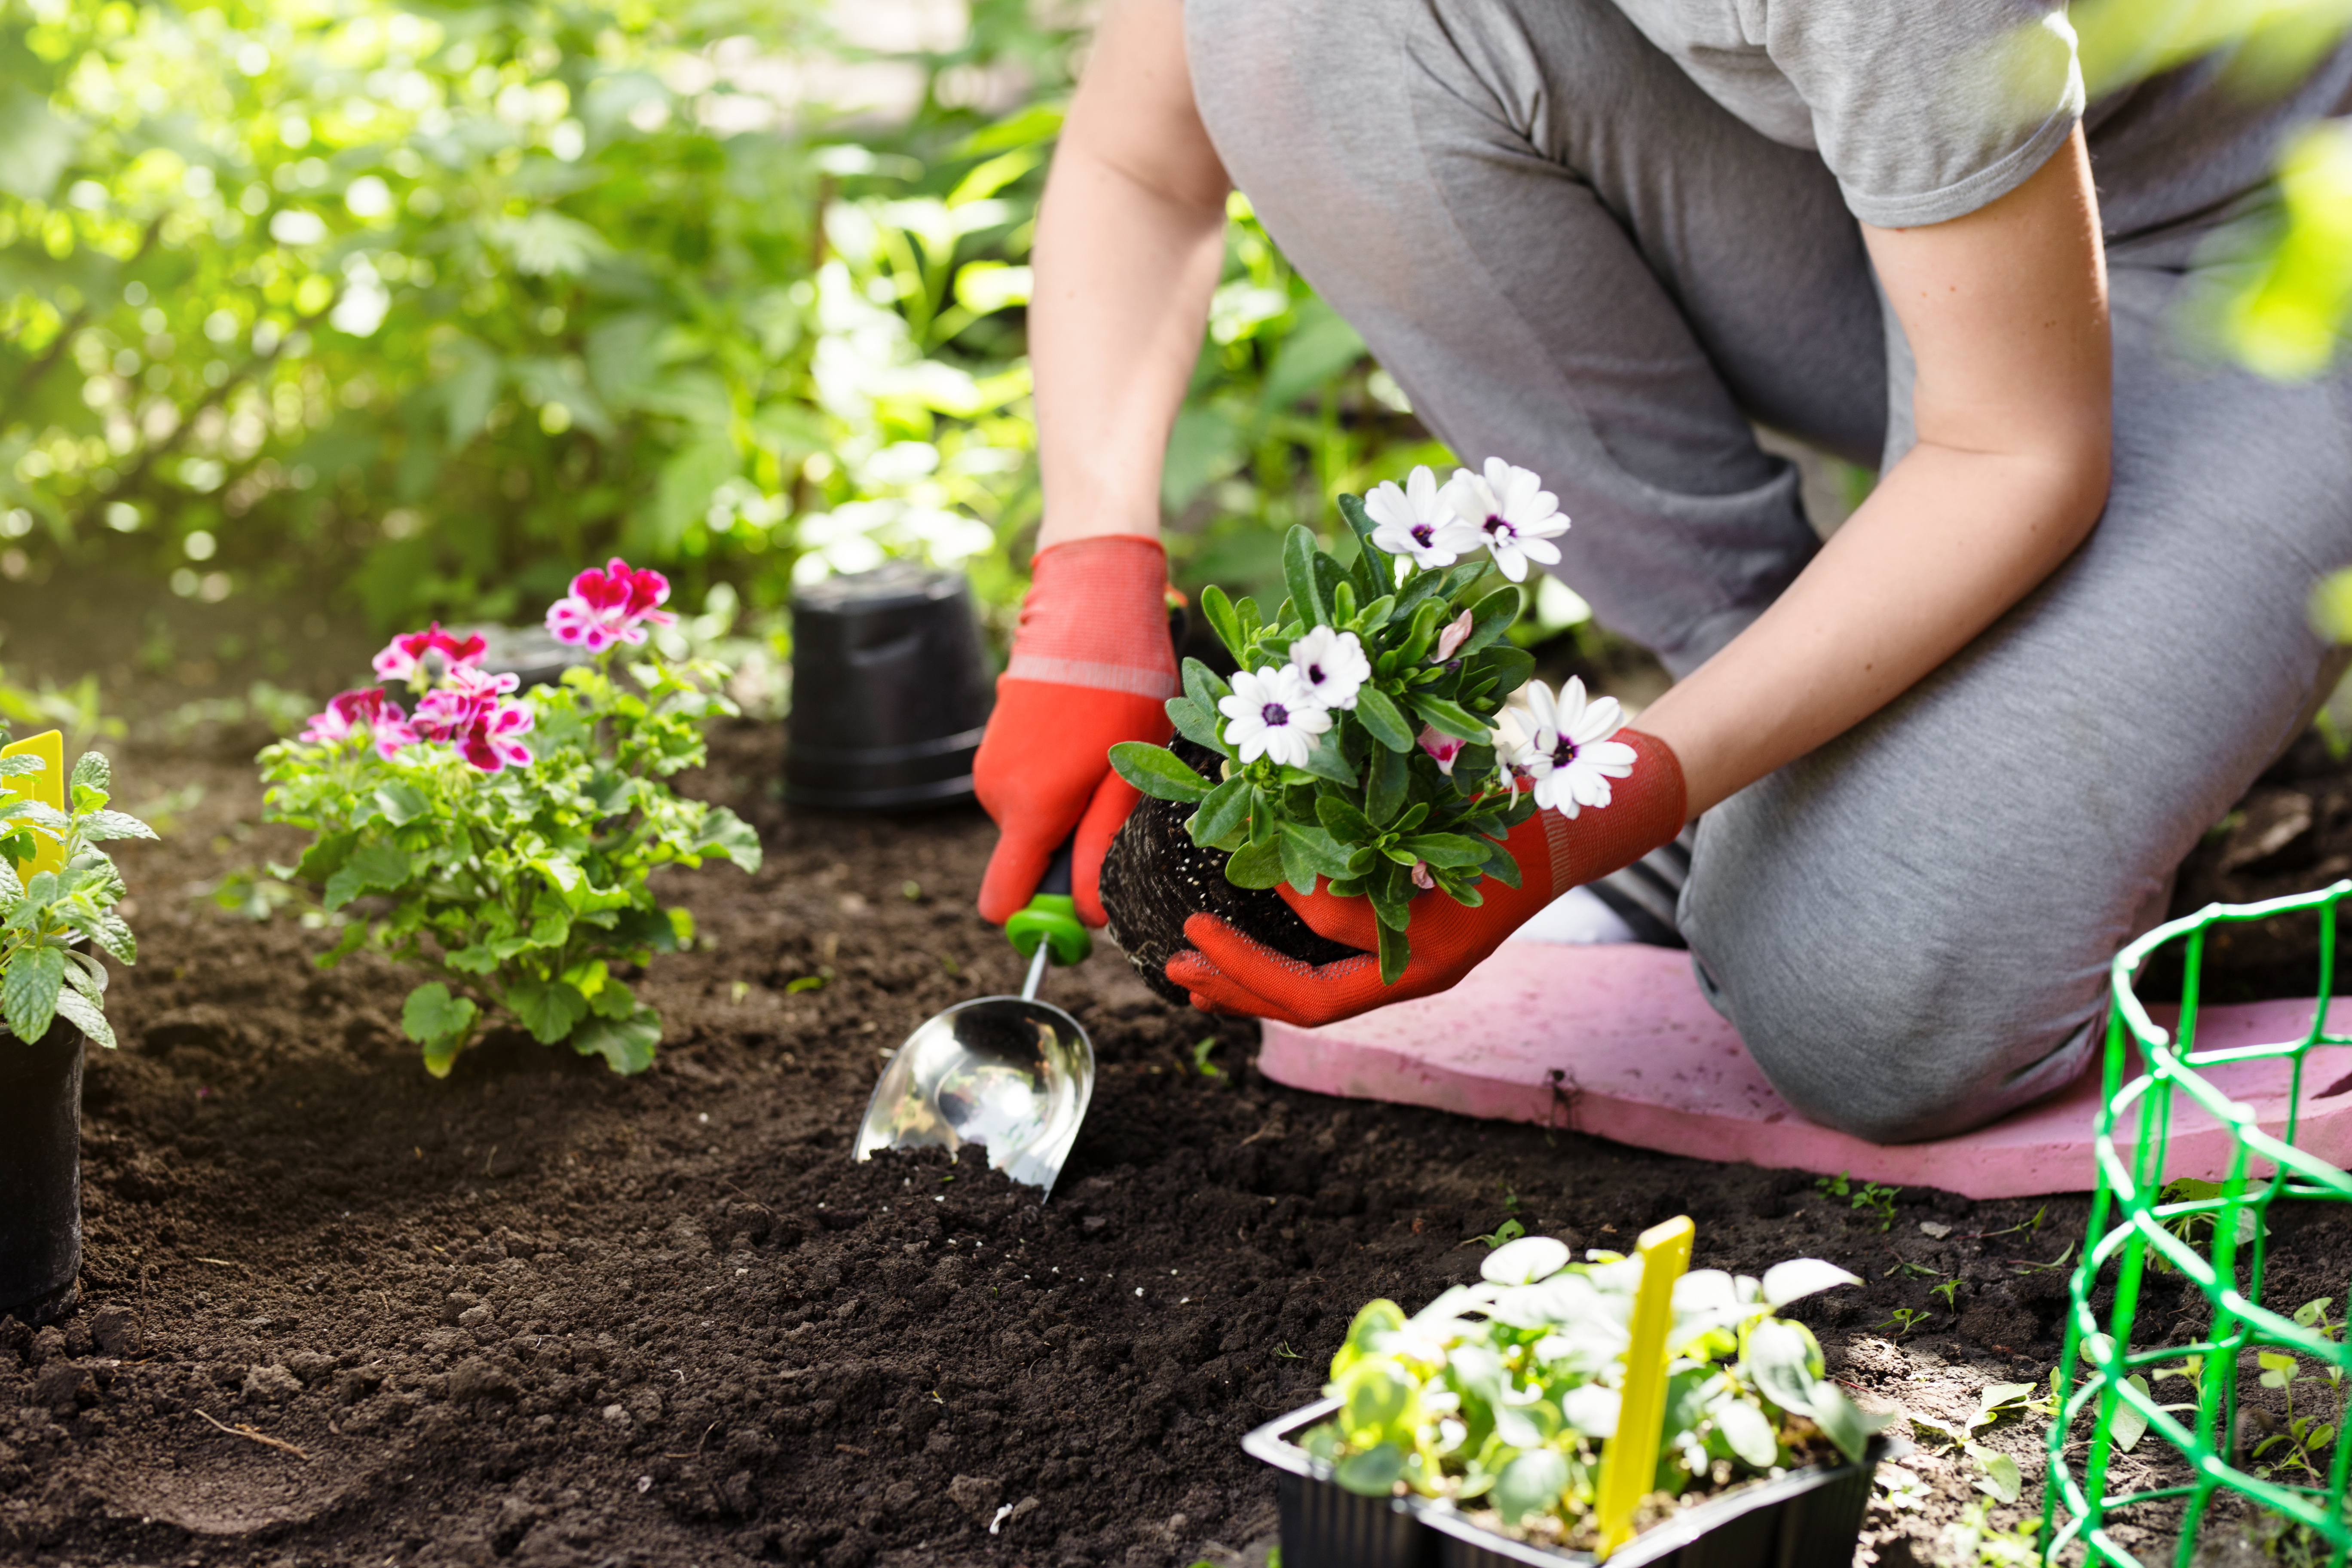 Get Your Garden Ready for Spring - LTD Gardening Tips